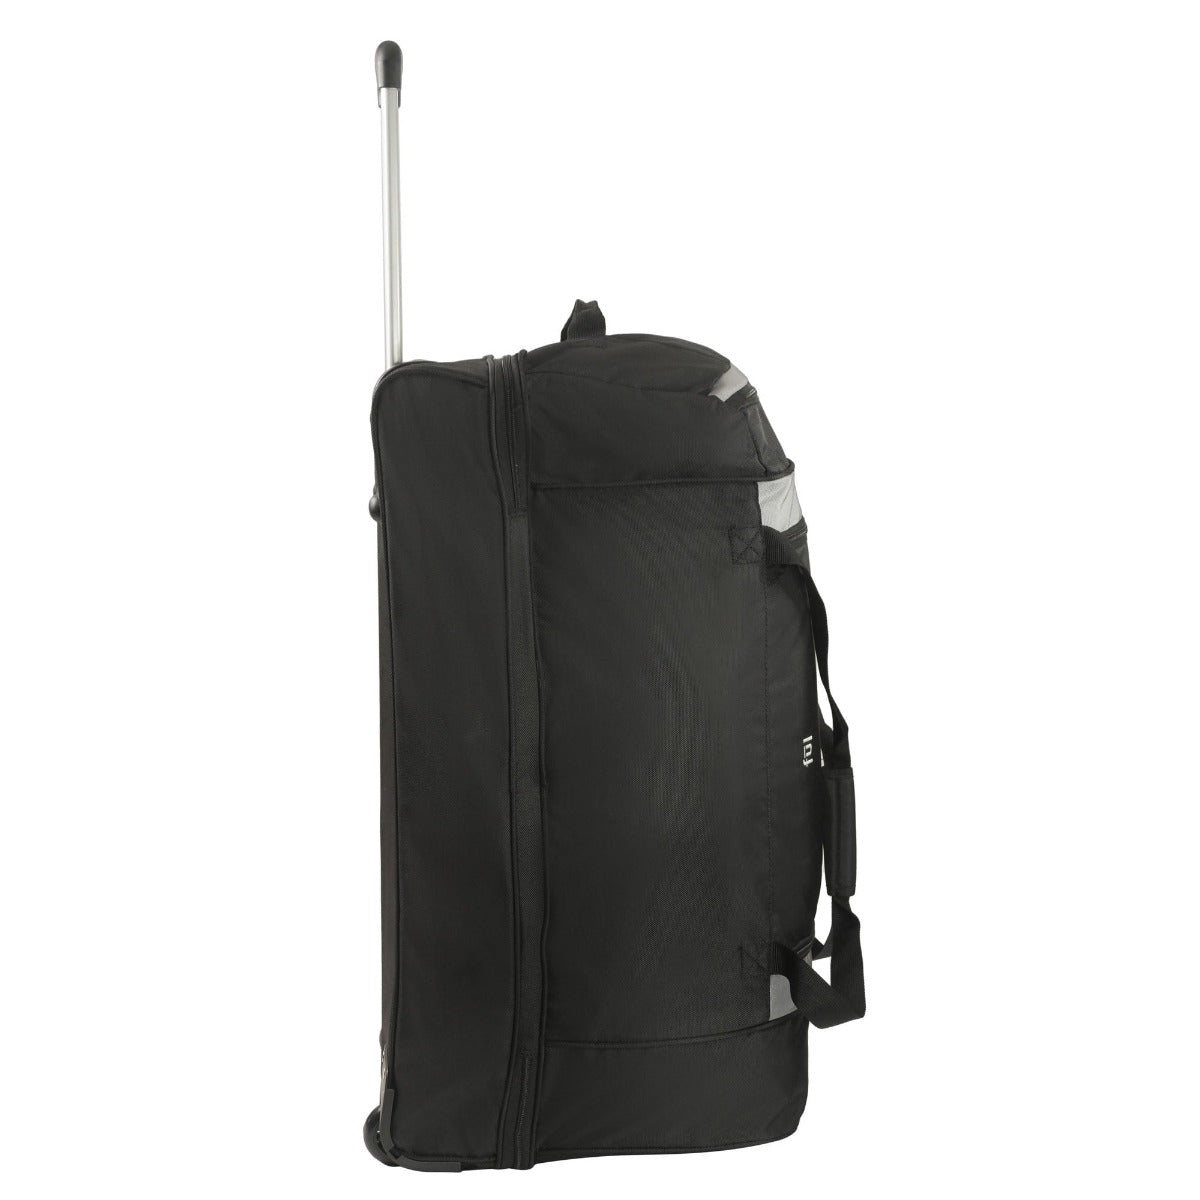 Ful Rig Series 30-inch split level wheeled rolling duffle travel bag in black